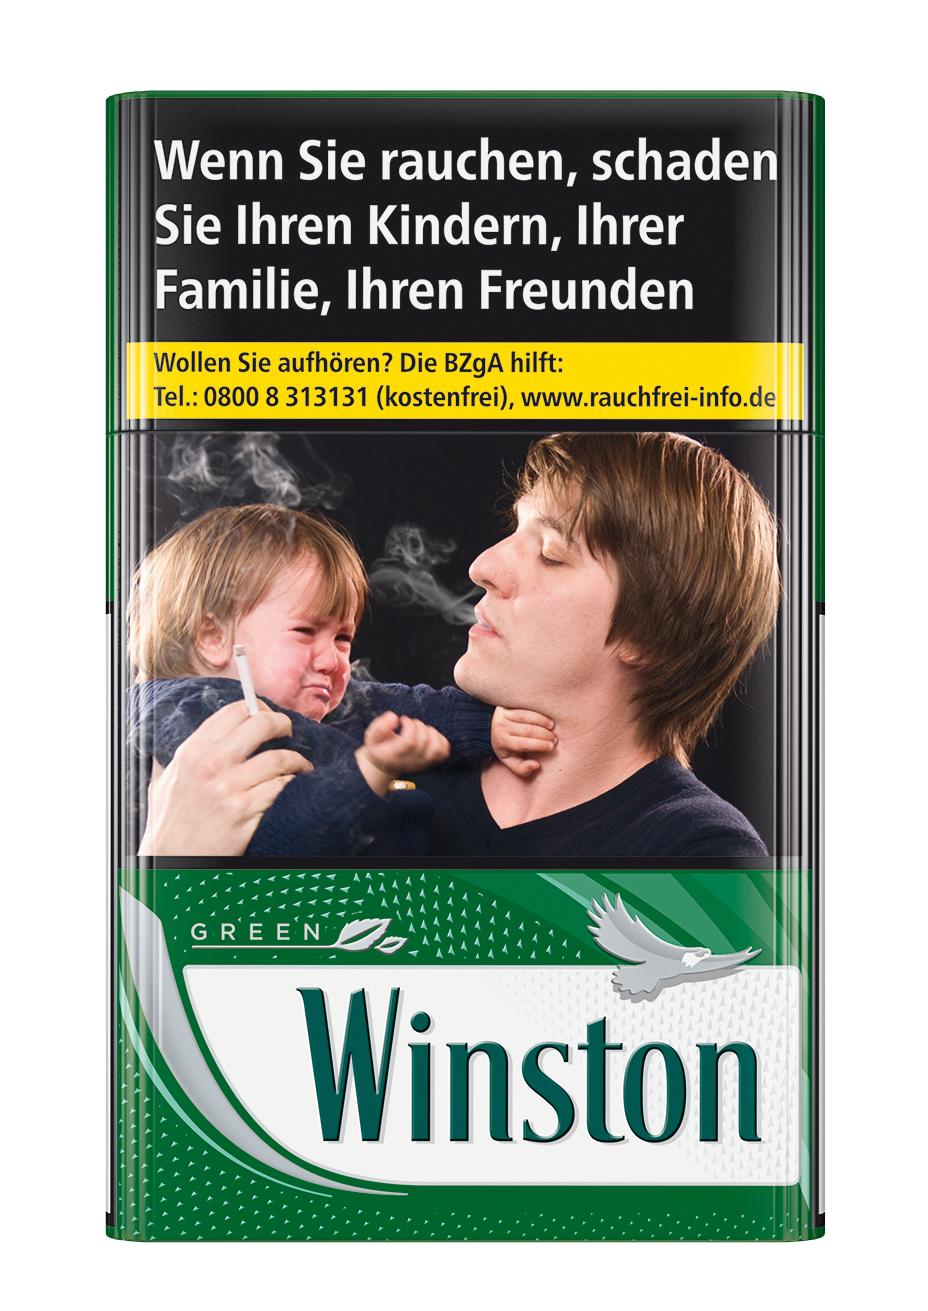 Winston Green ohne Menthol 10 x 20 Zigaretten